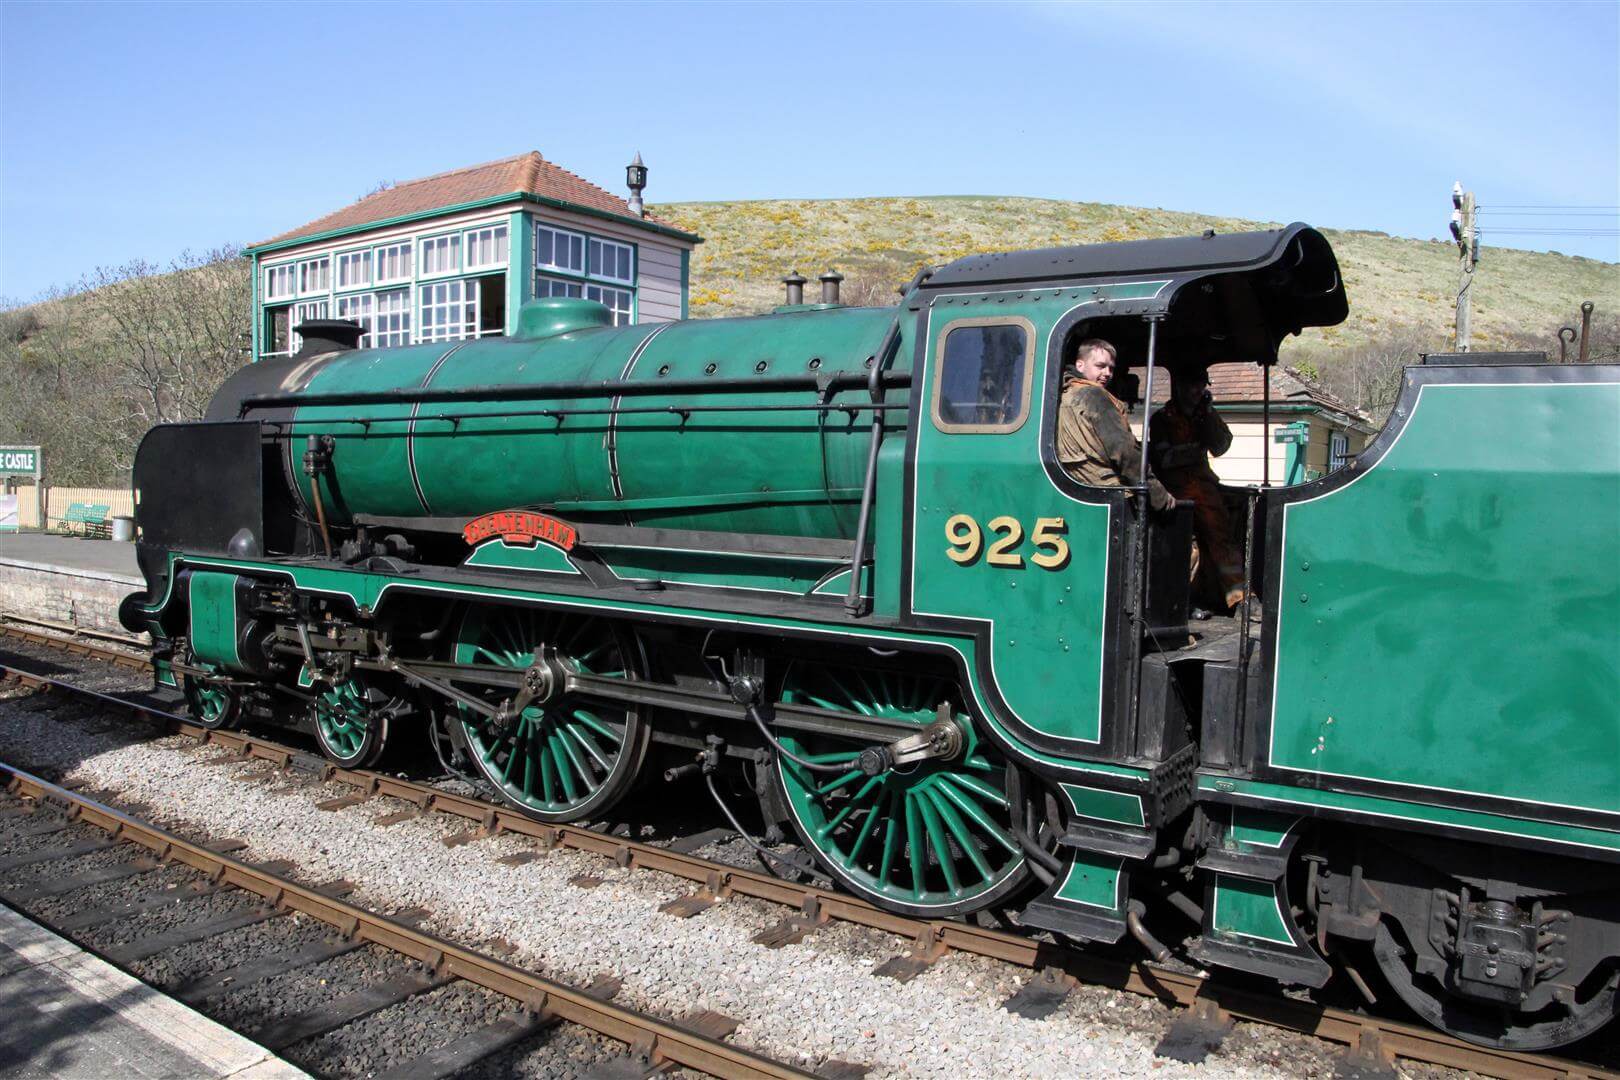 southern-railway-schools-class-express-steam-locomotive-cheltenham-arrives-for-spring-steam-gala